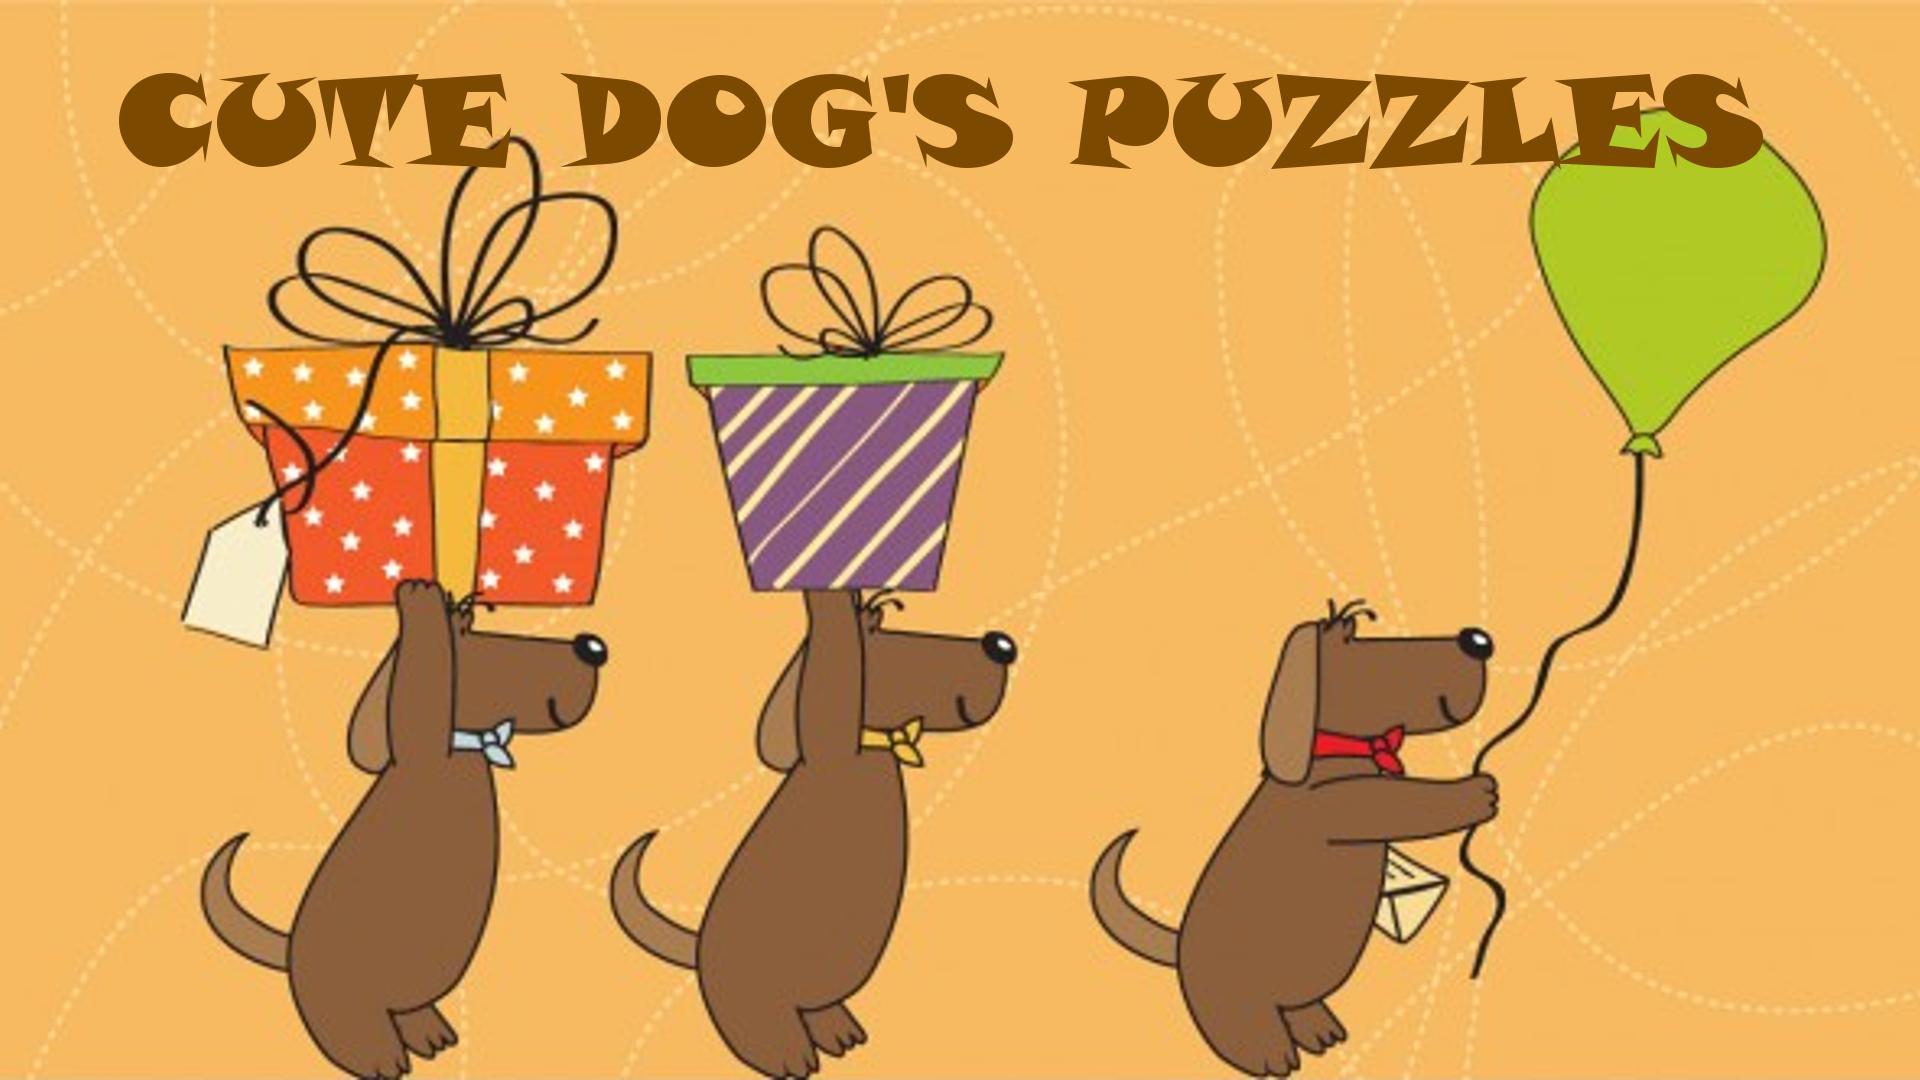  Сute Dog's Puzzles